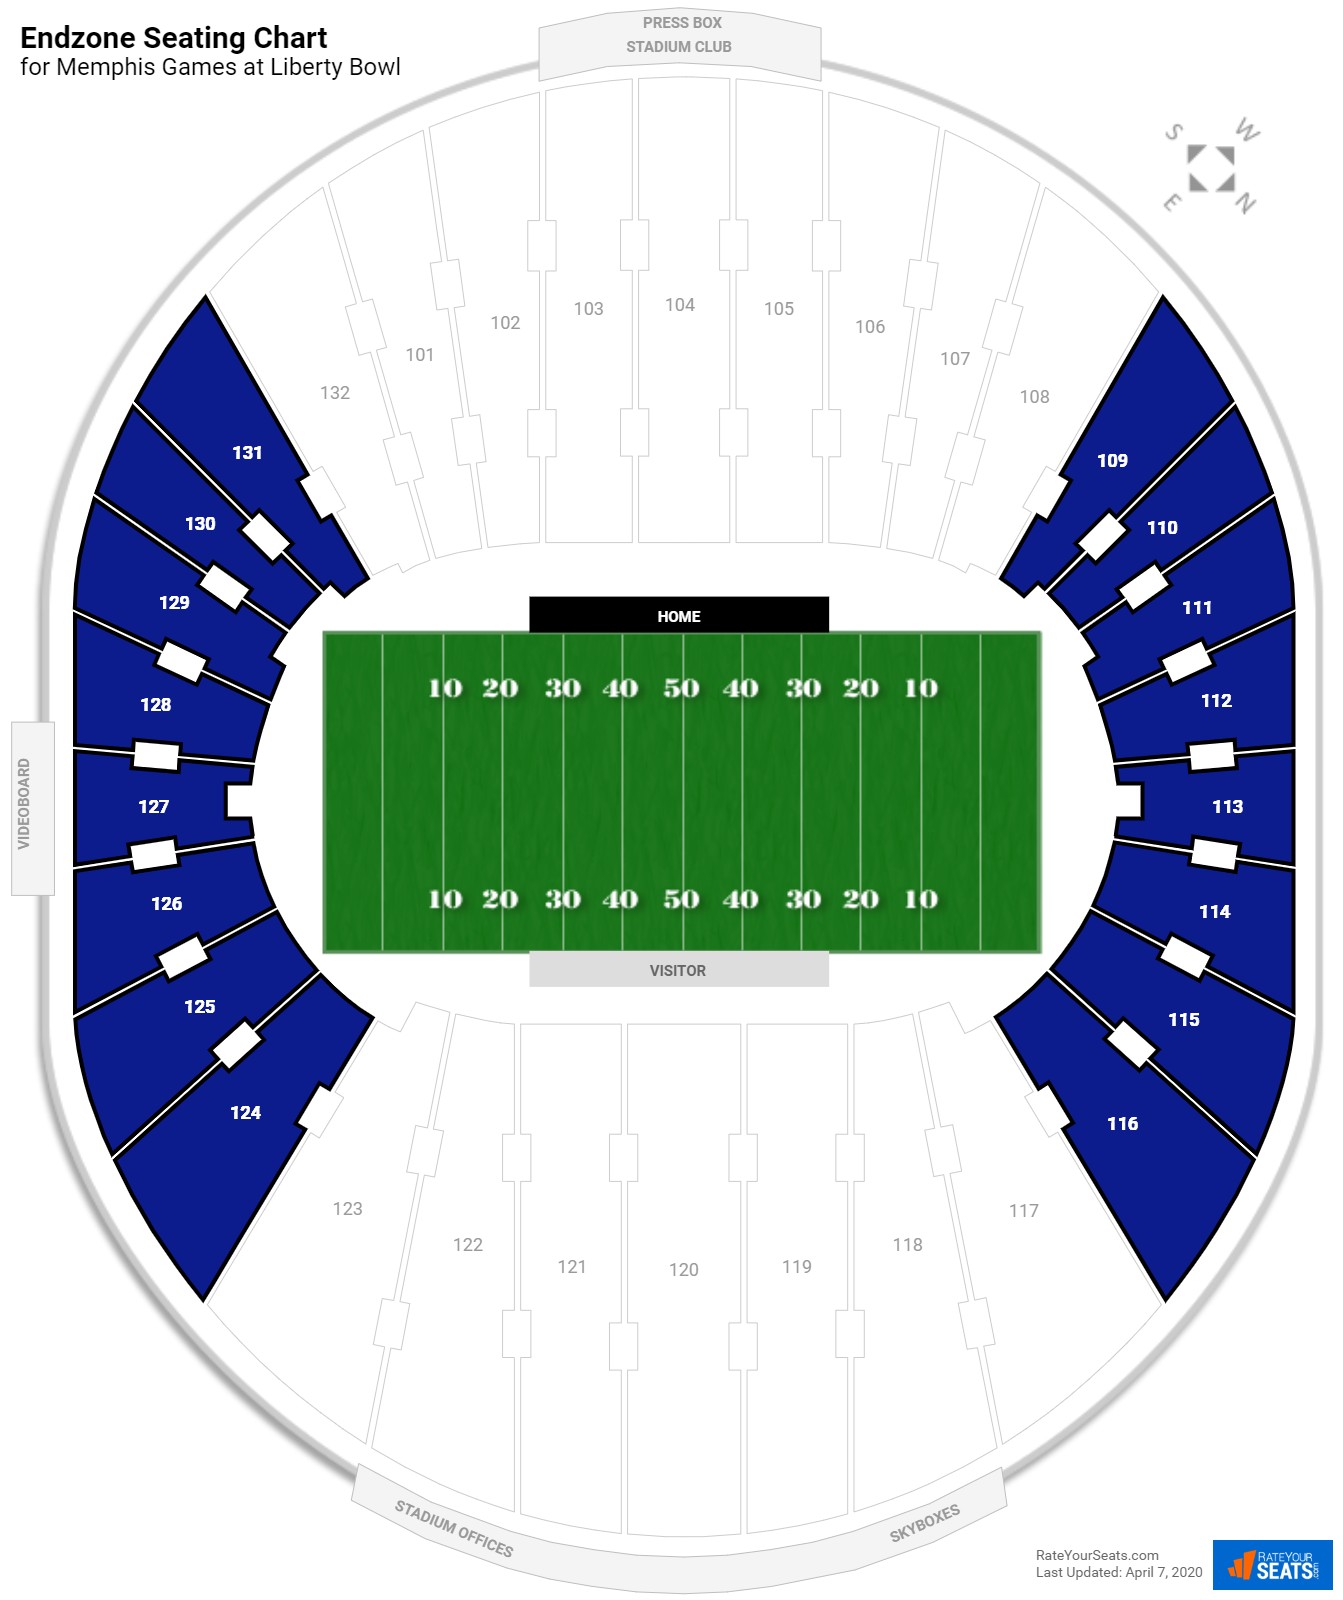 Endzone - Liberty Bowl Football Seating - RateYourSeats.com